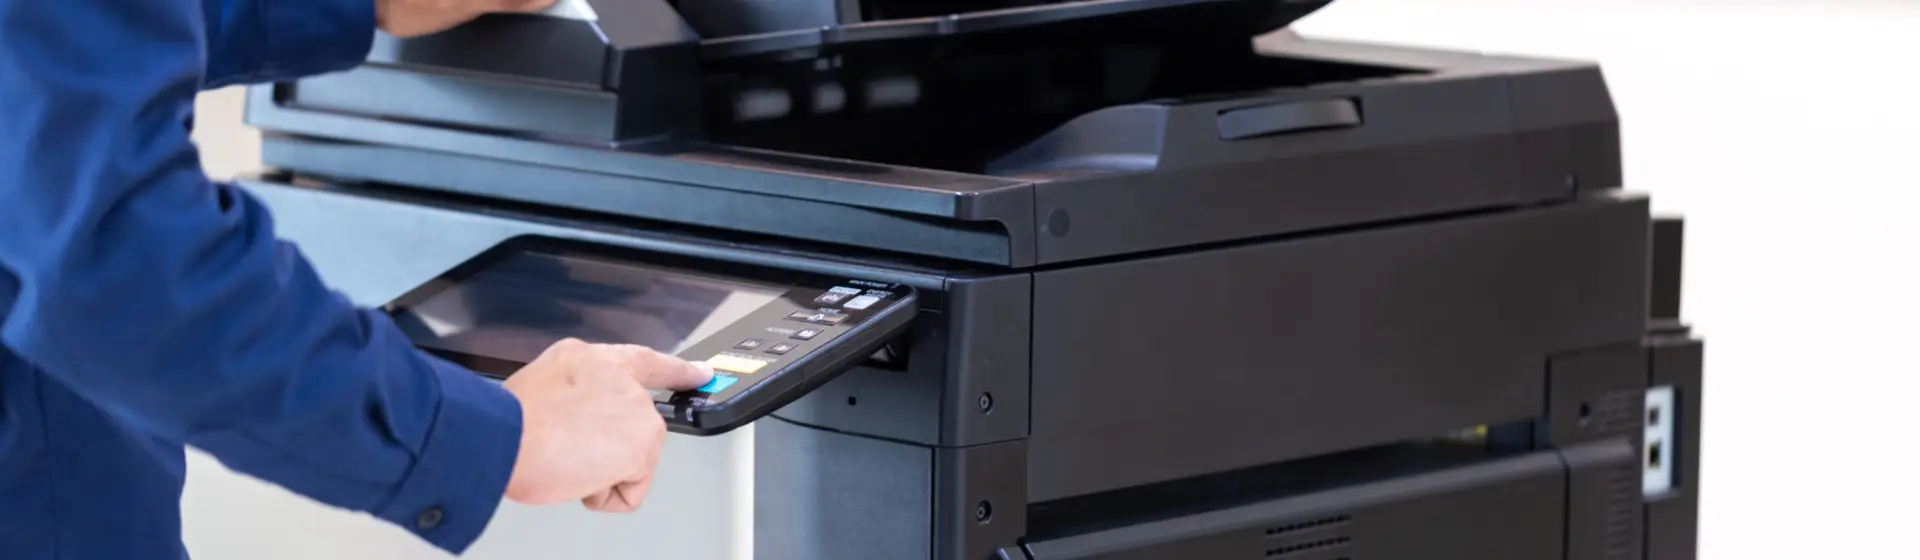 Impressora HP tanque de tinta: os 4 principais modelos da marca